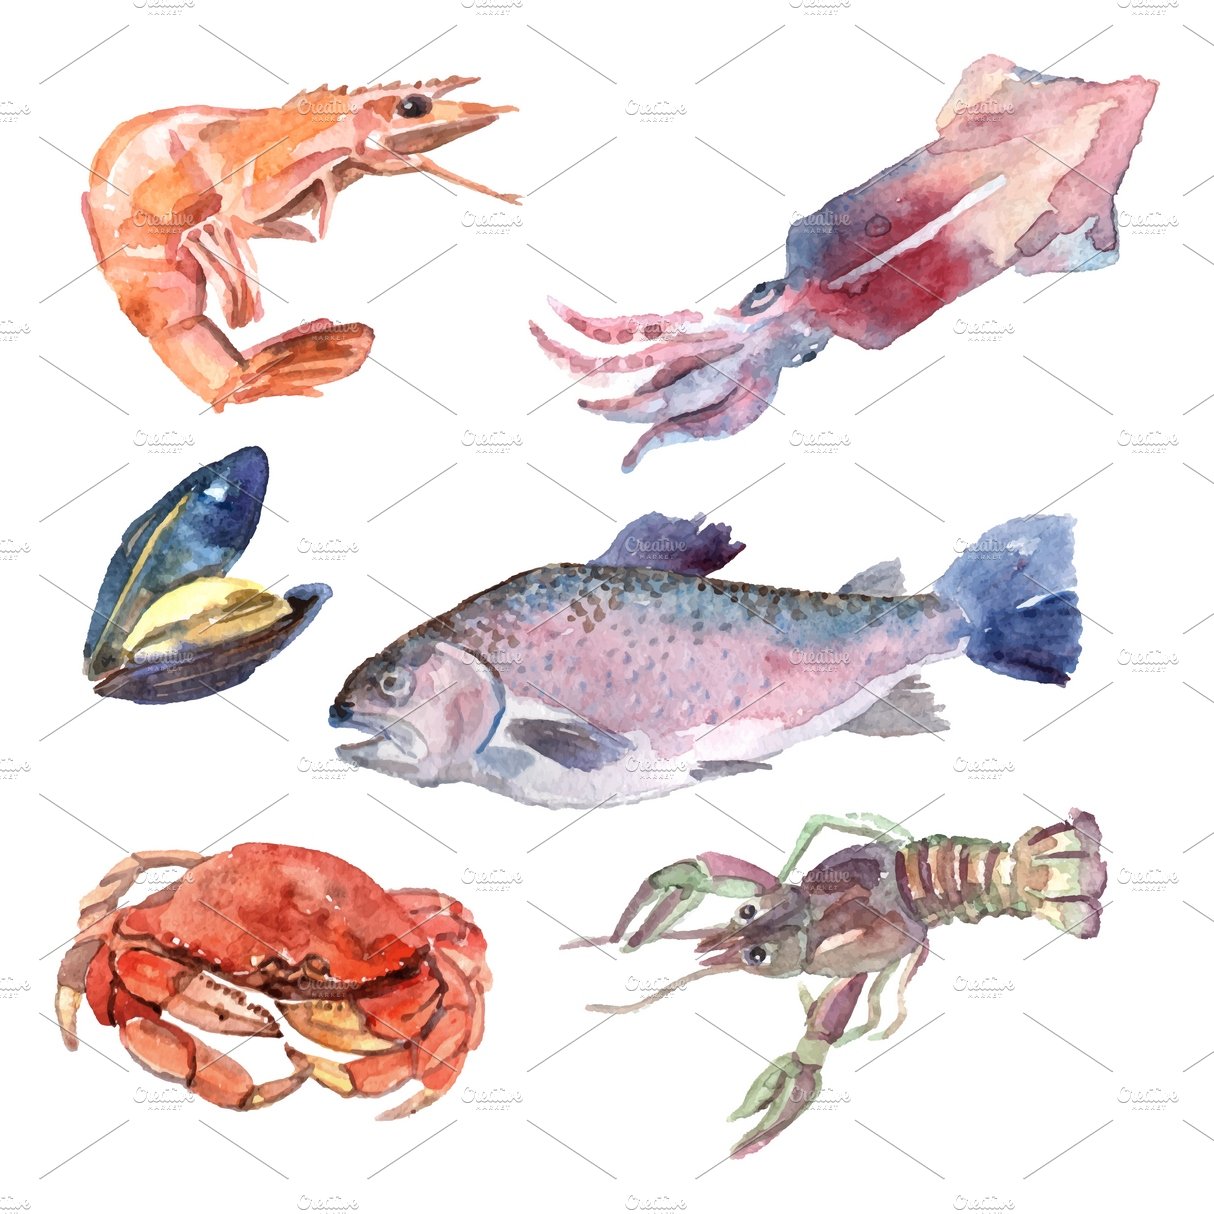 Watercolor sea food set cover image.